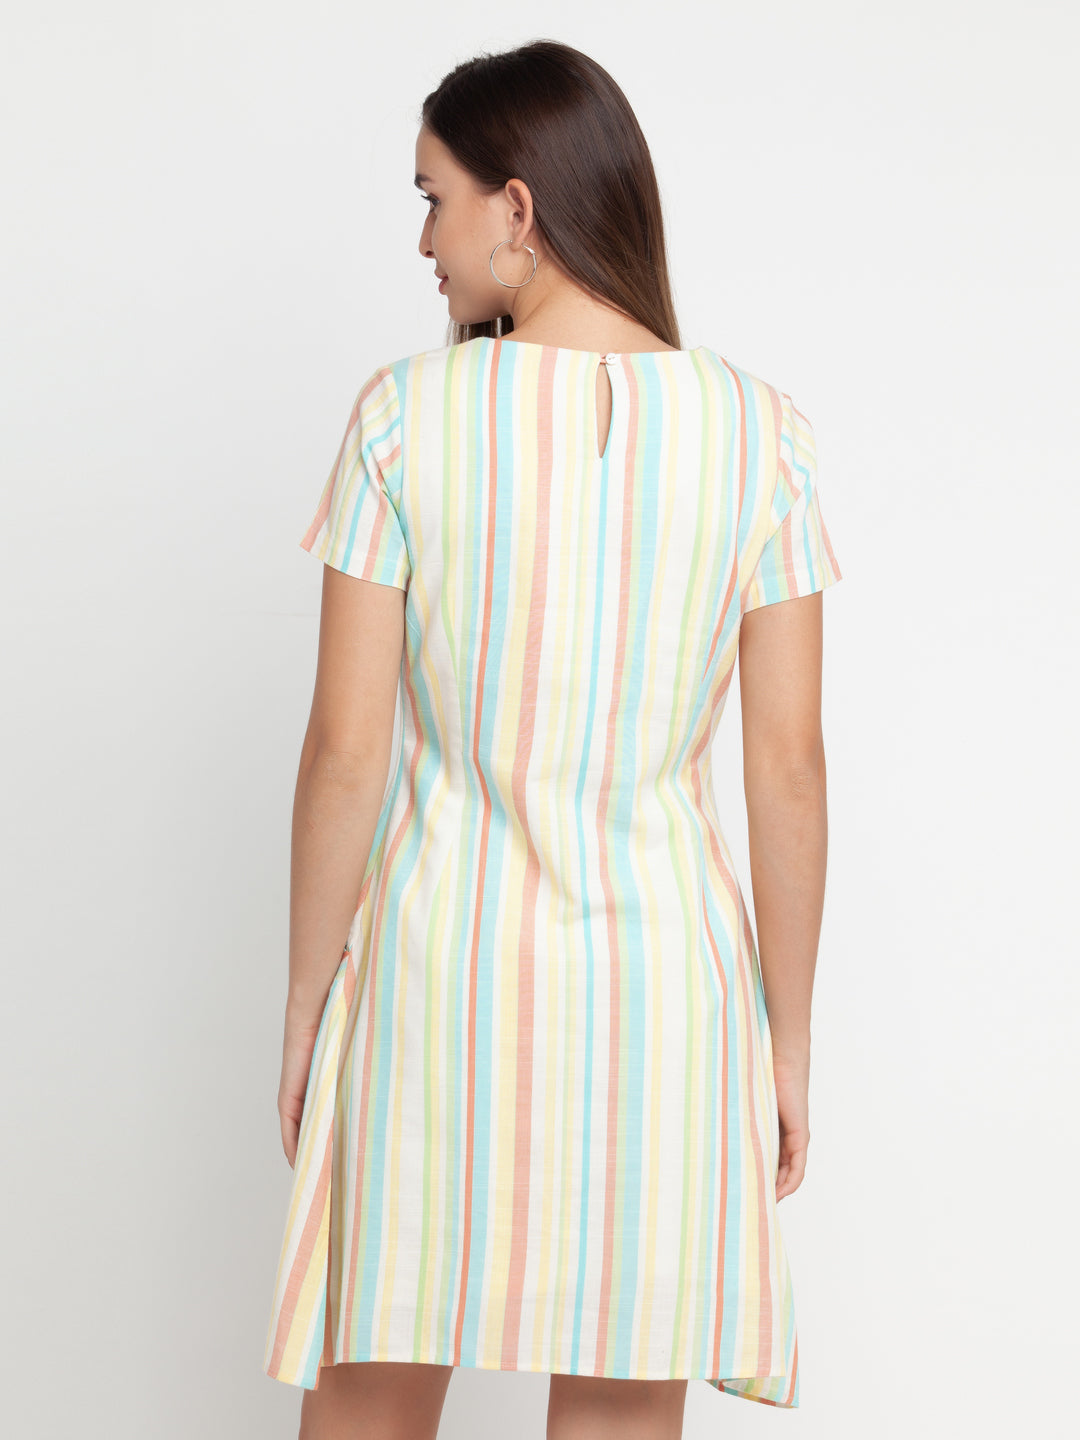 Multicolored Striped Short Dress For Women